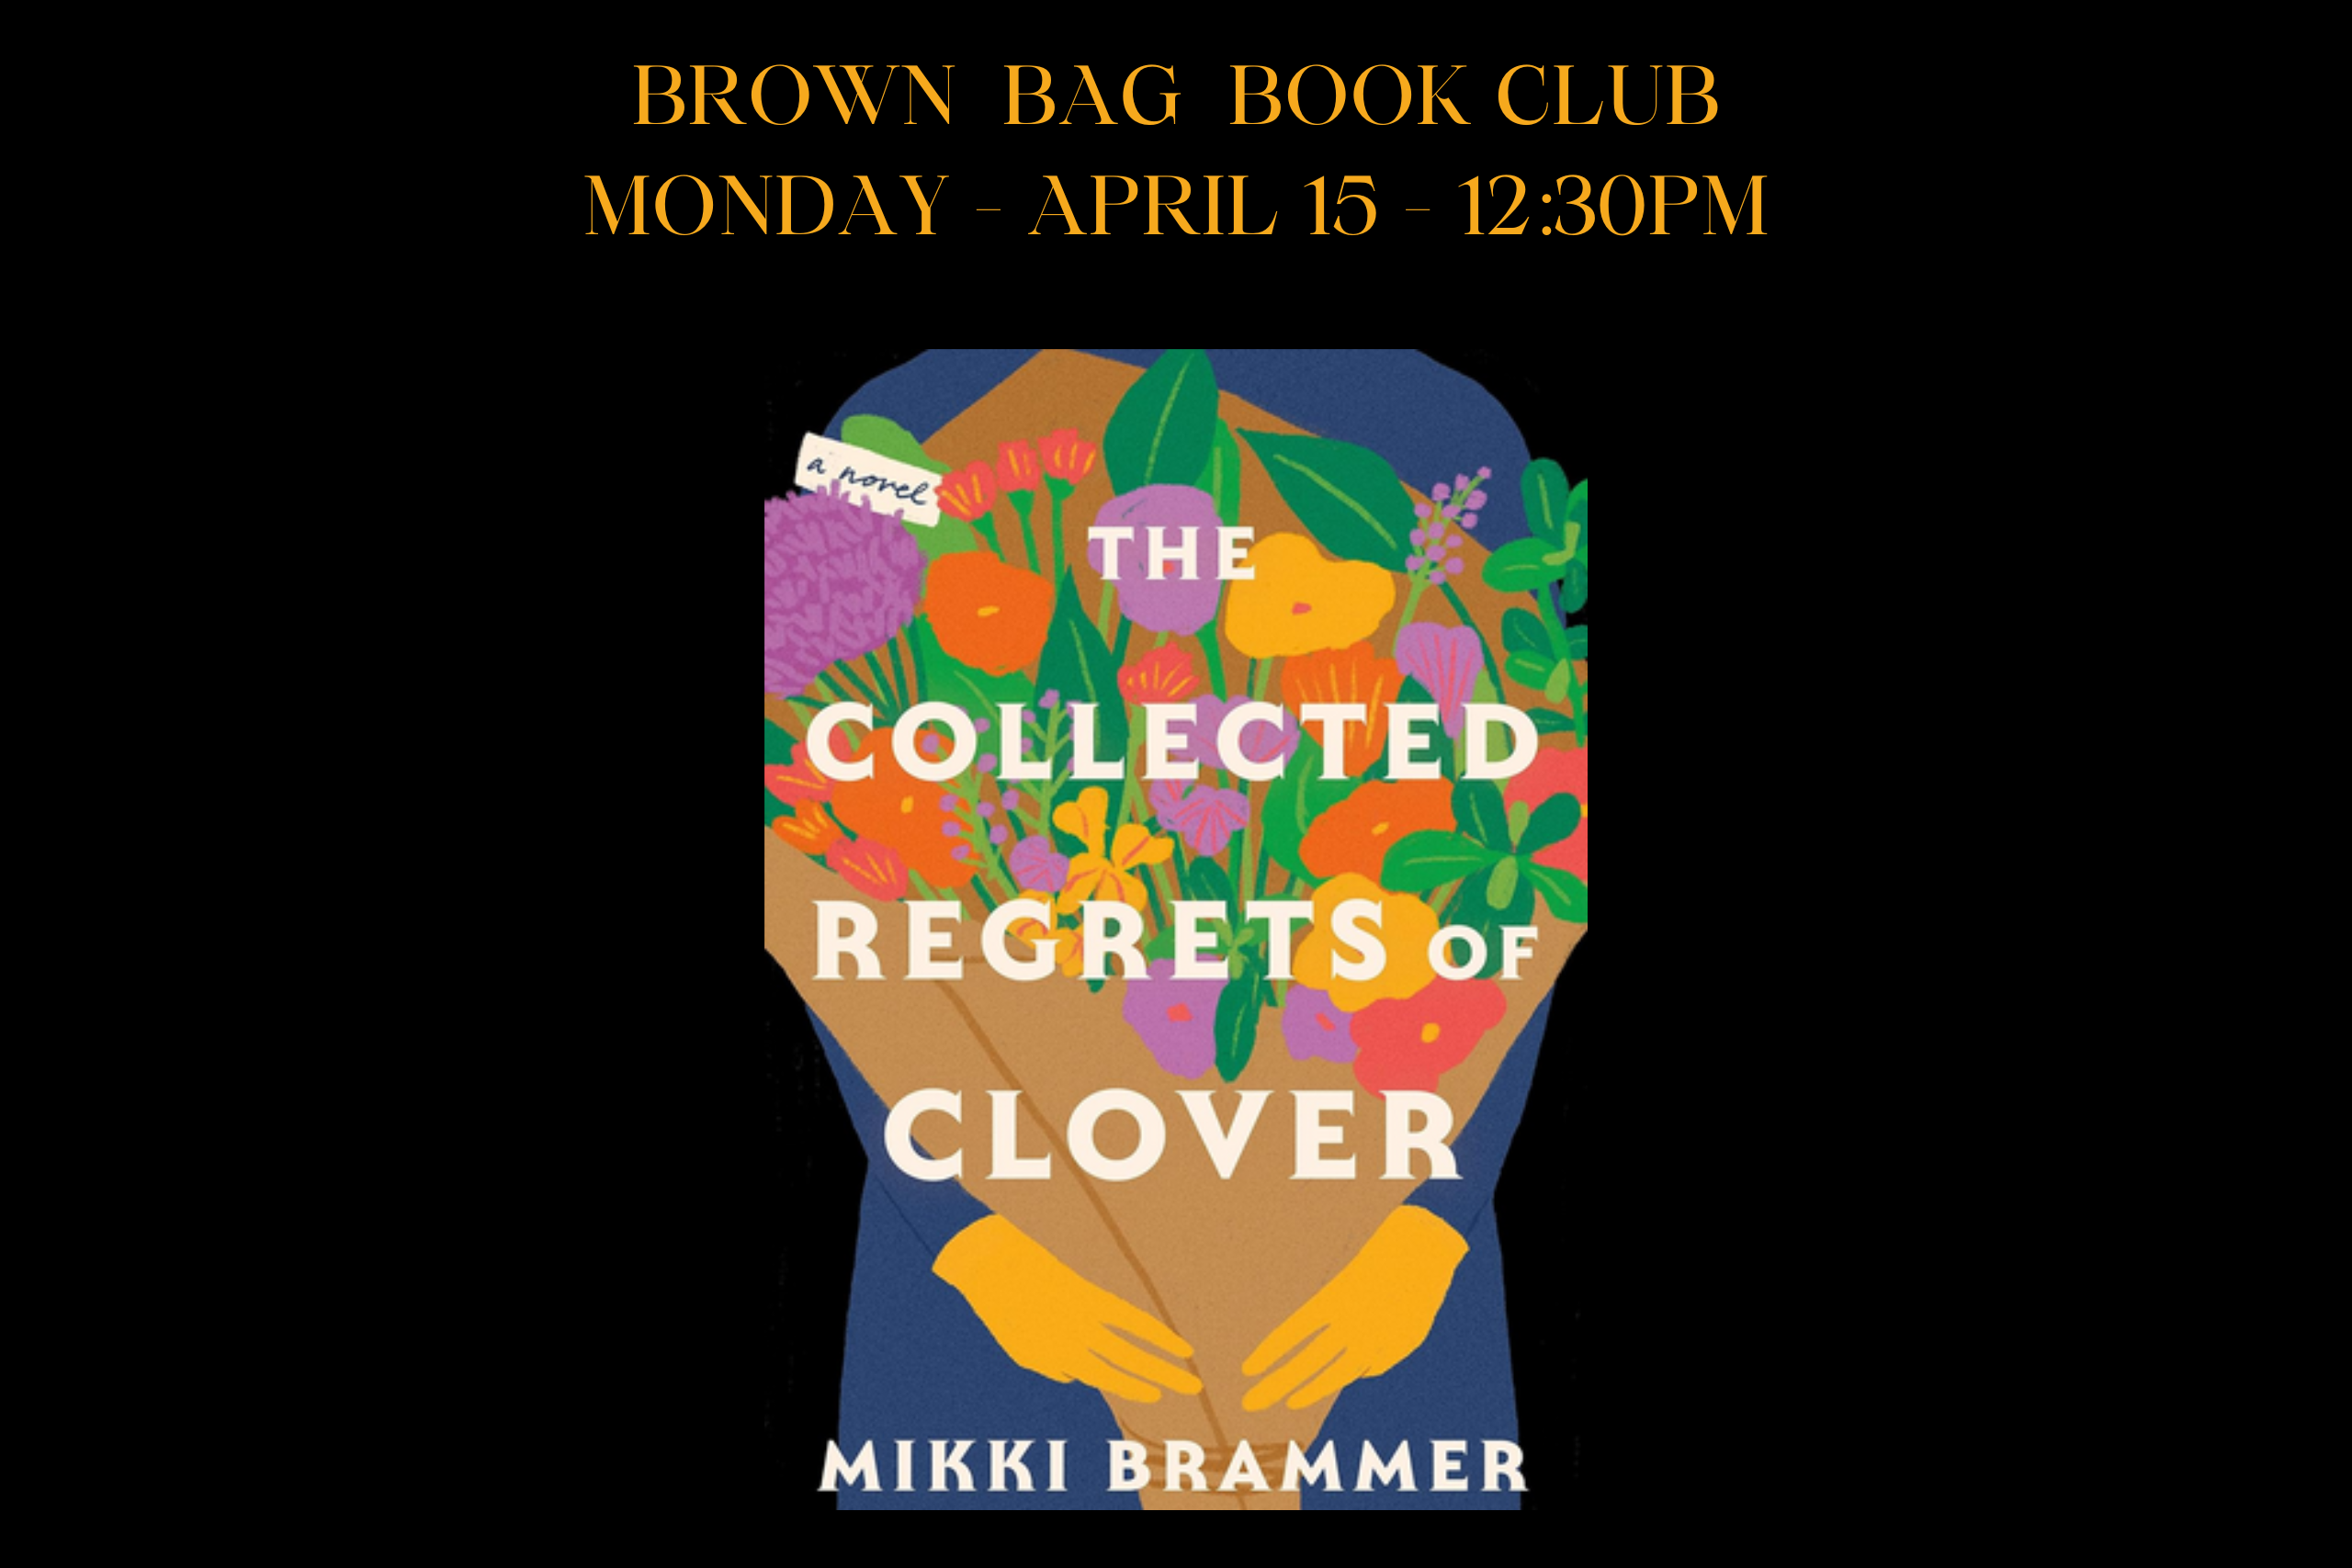 Brown Bag Book Club to Meet April 15th